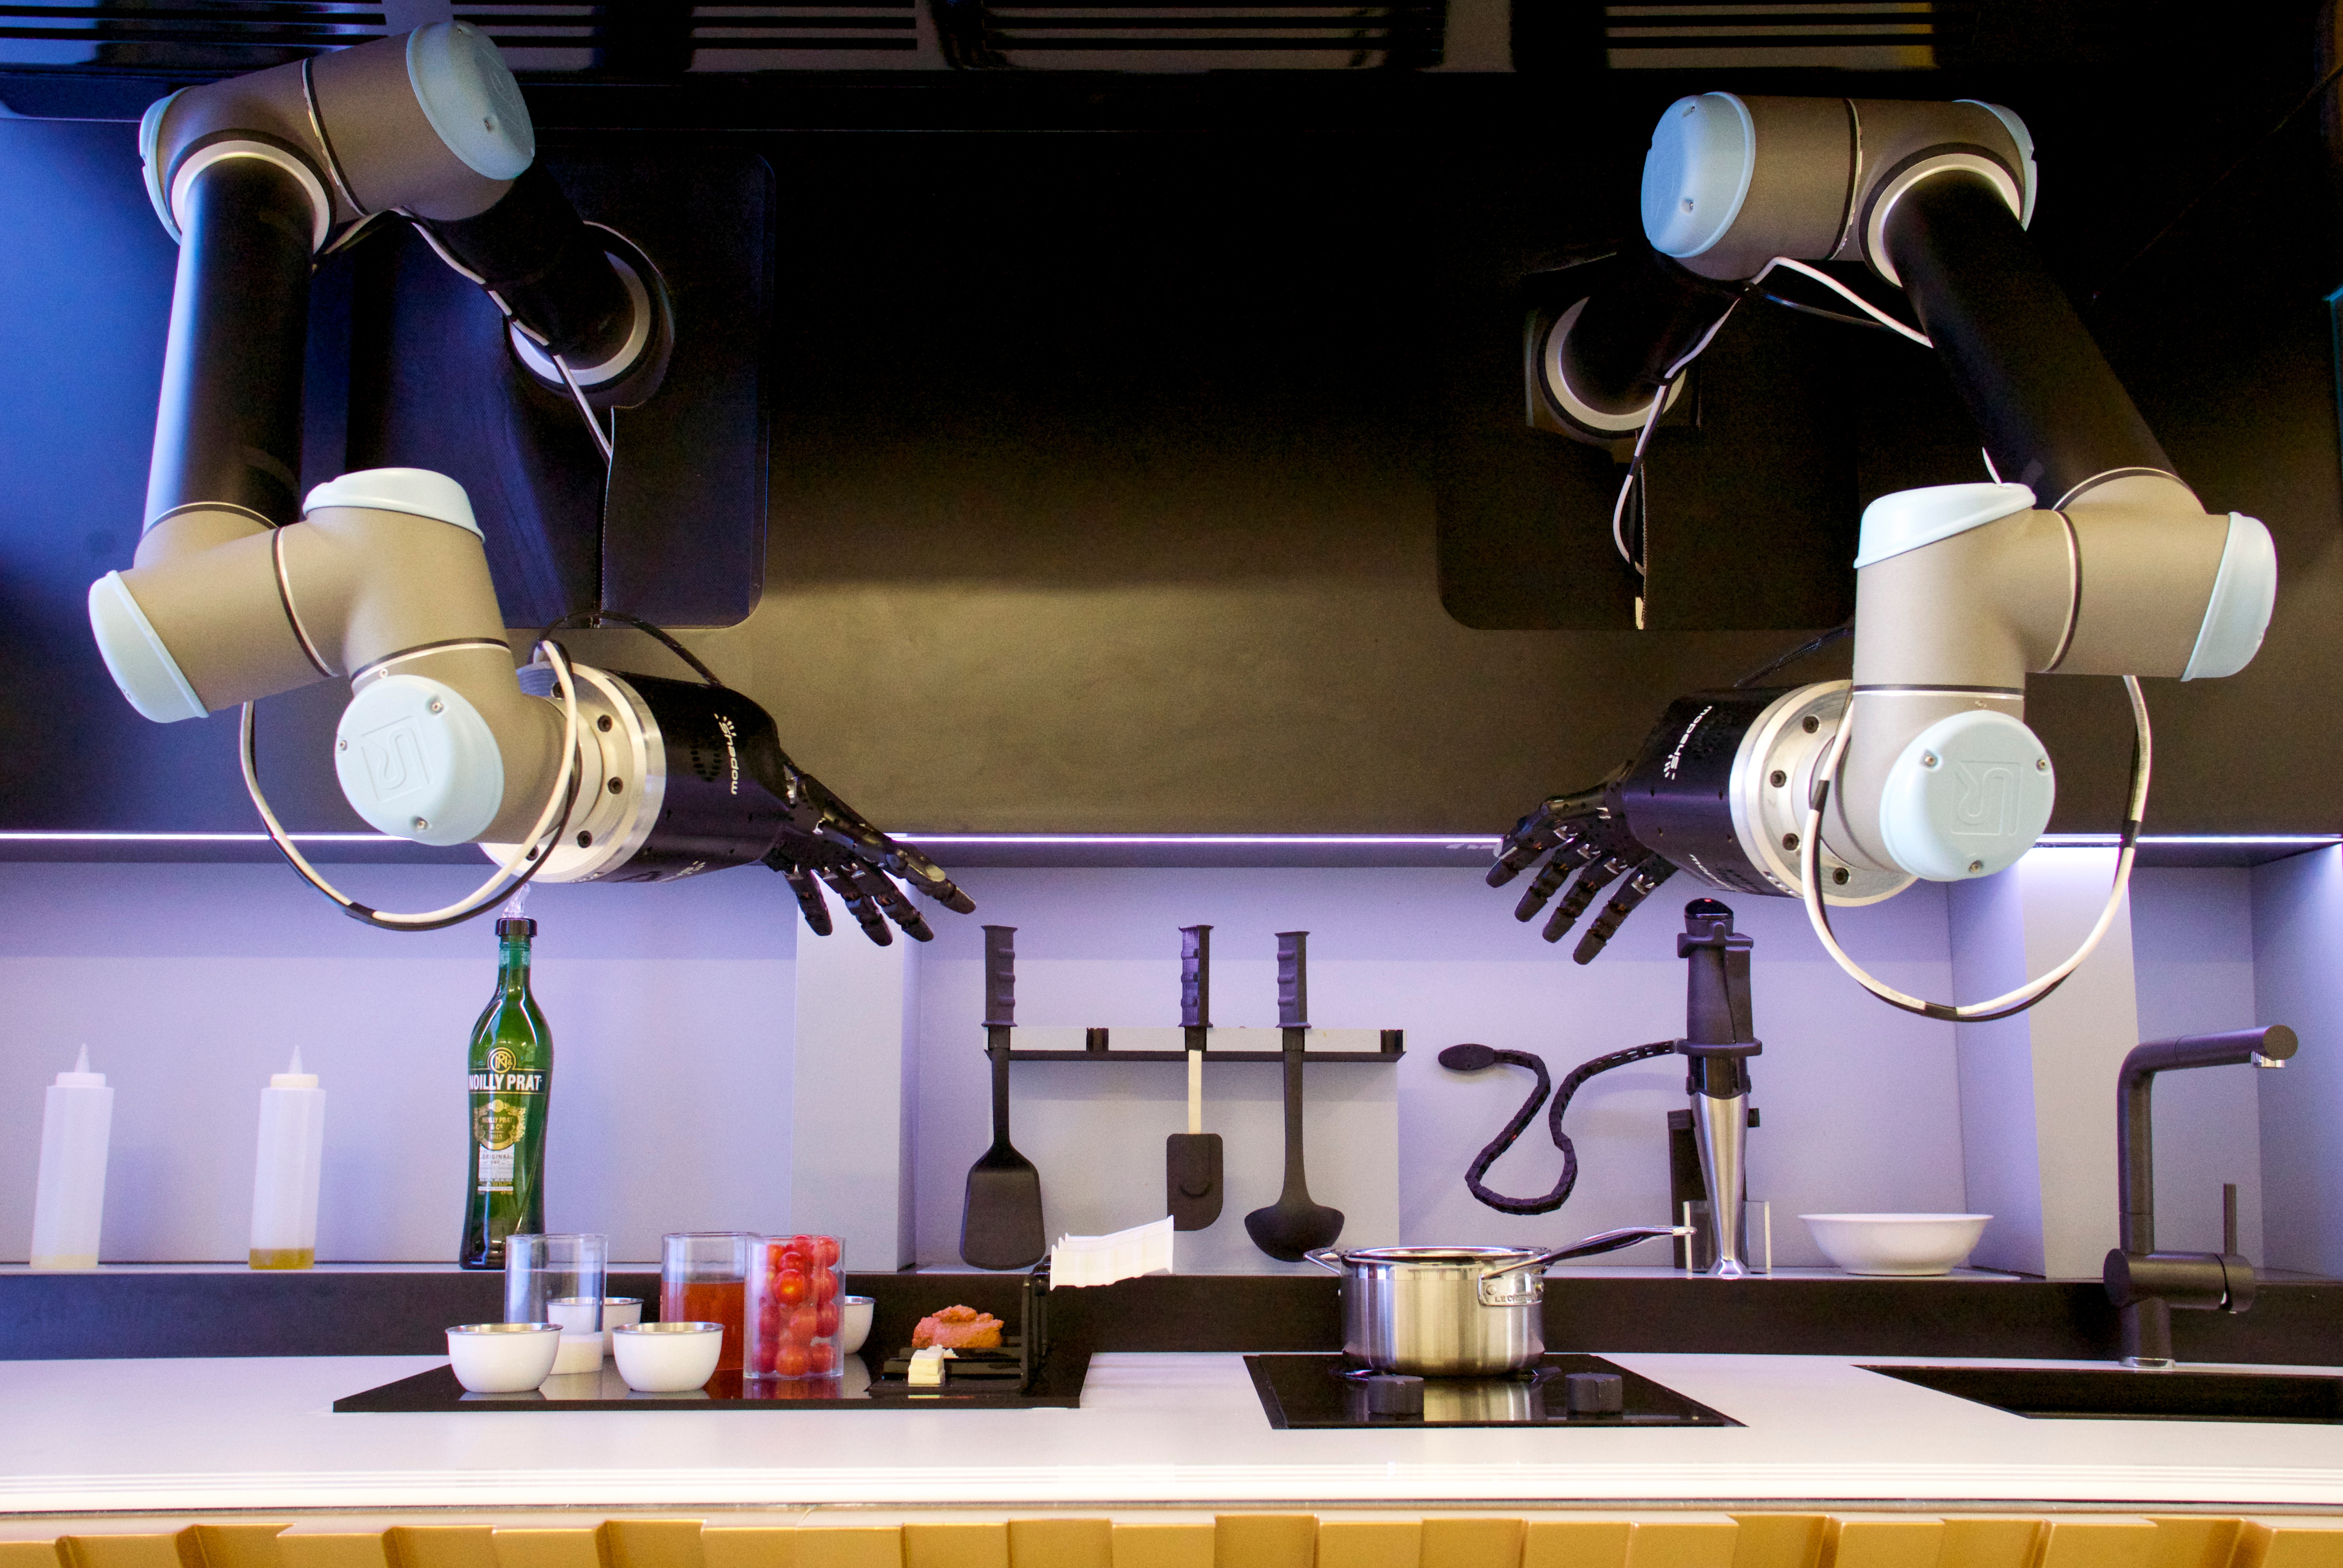 http://blog.robotiq.com/hubfs/Moley-Robotics-Automated-kitchen.jpg